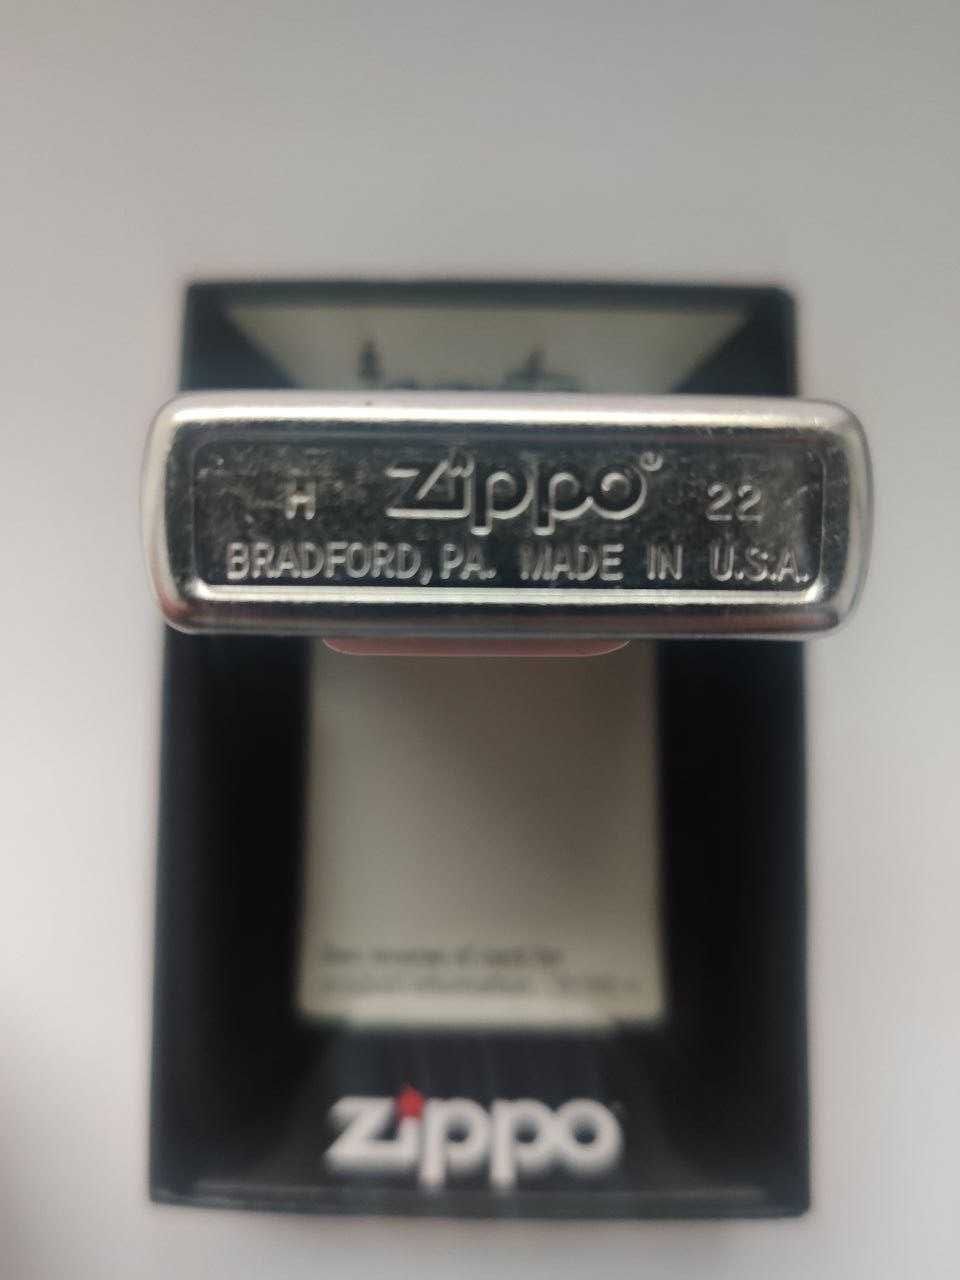 NEW! Zippo зажигалка  Оригинальная из США Подарок